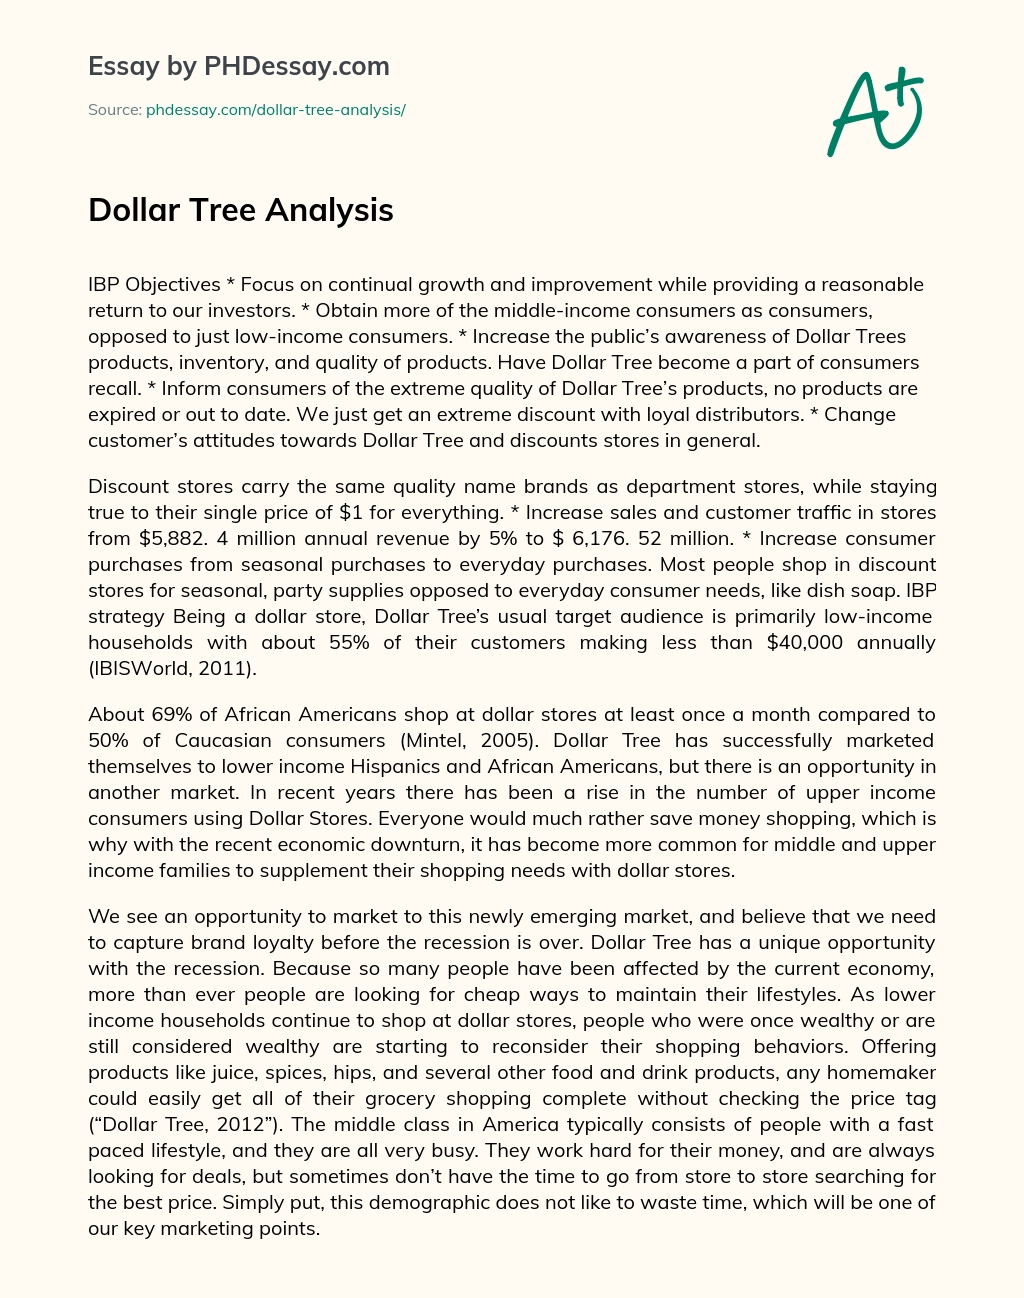 Dollar Tree Analysis essay